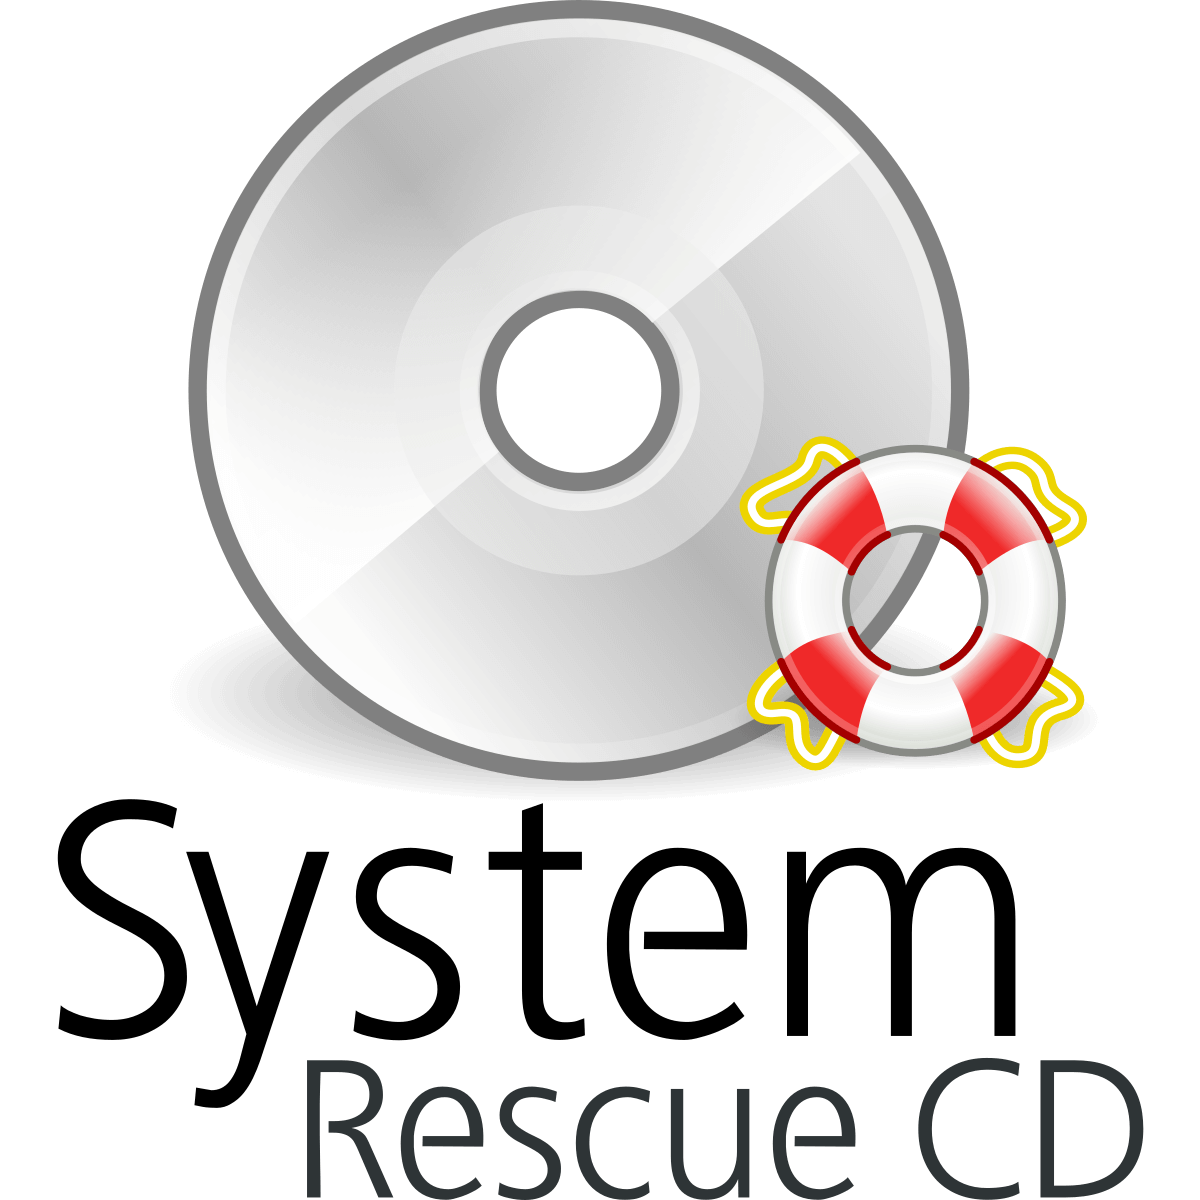 SystemRescueCd 7.0.1 + Crack Free Download 202